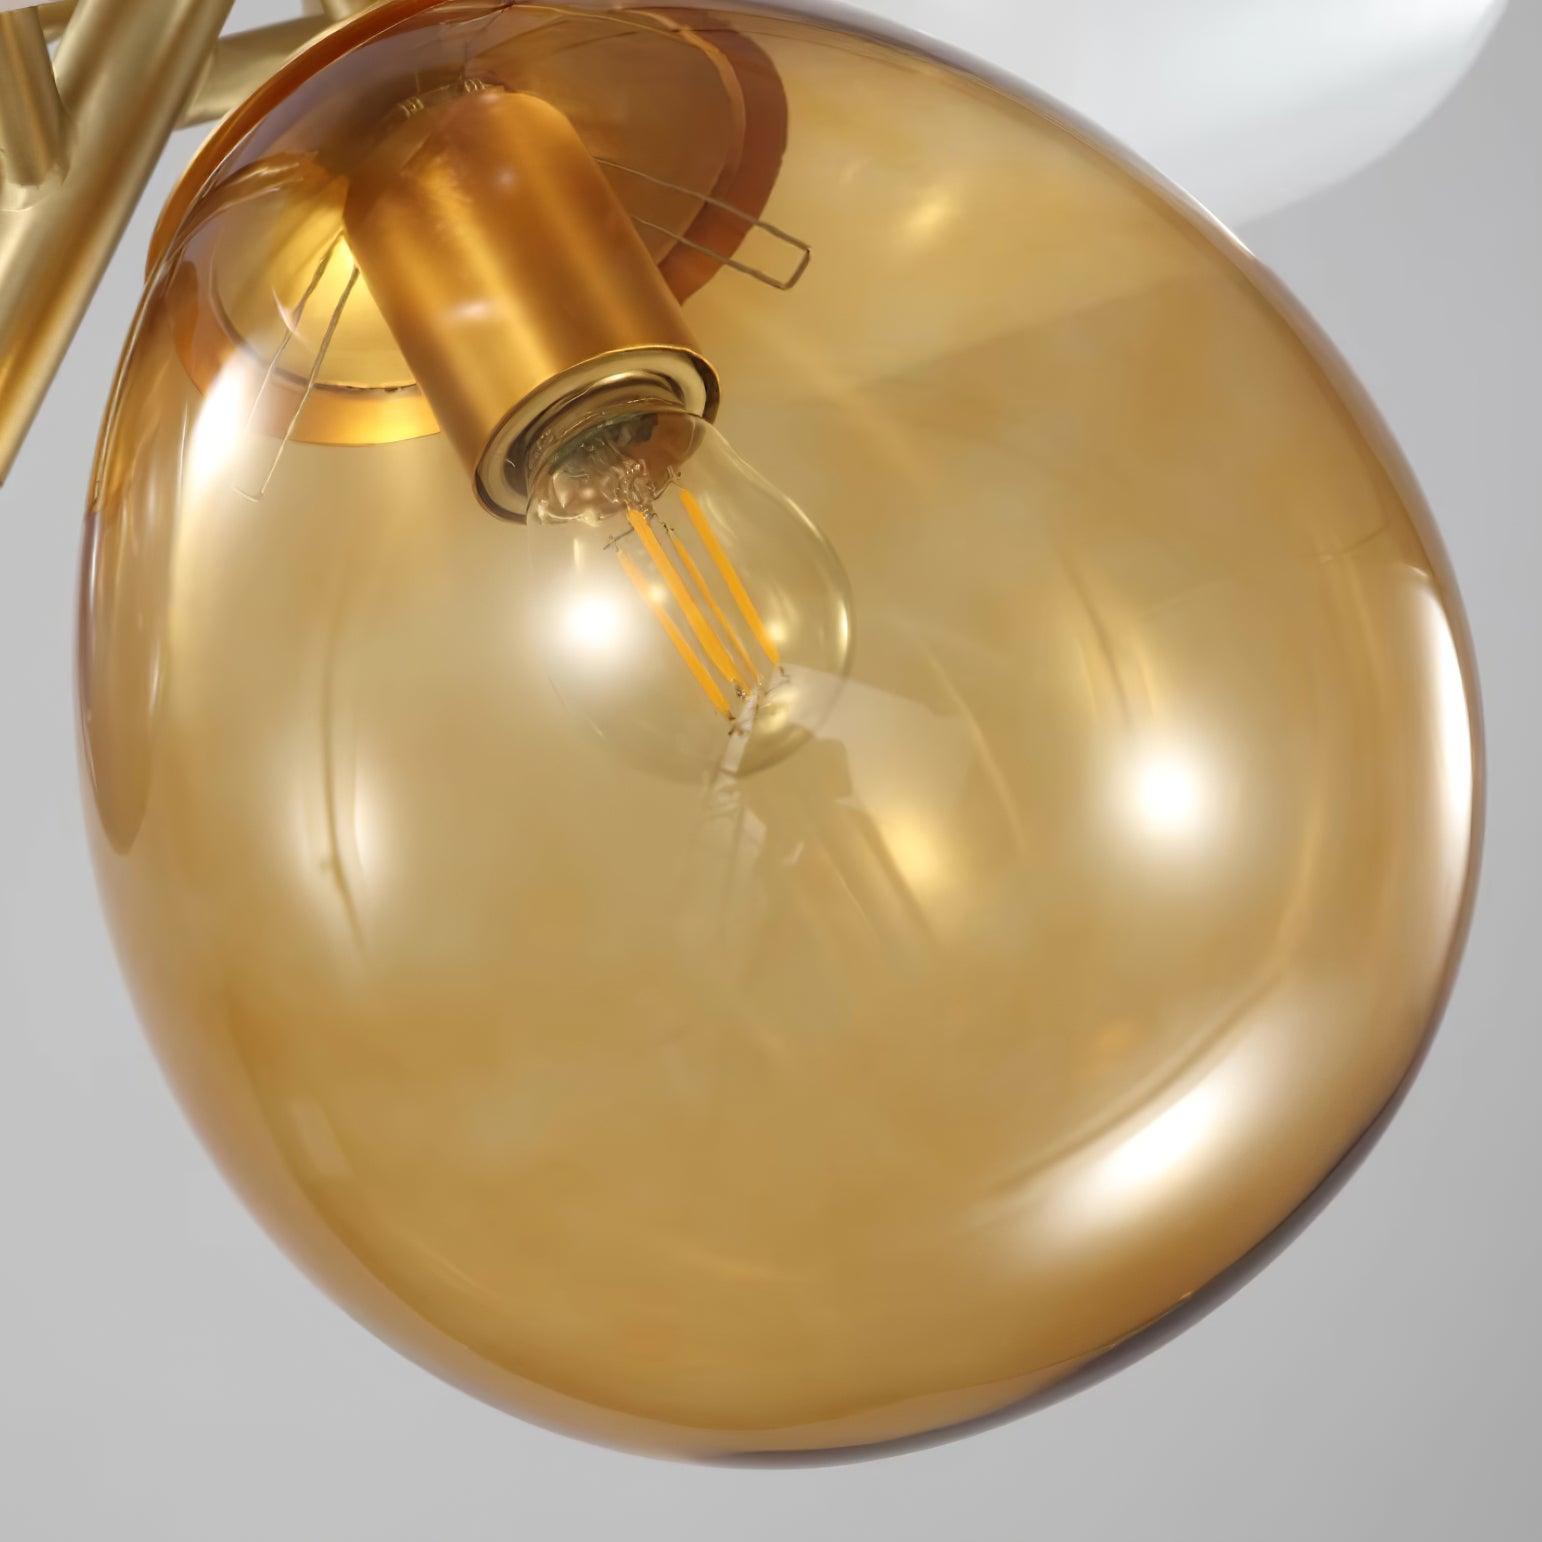 Bella Bubble Pendant Lamp 23.6″- 24.8″